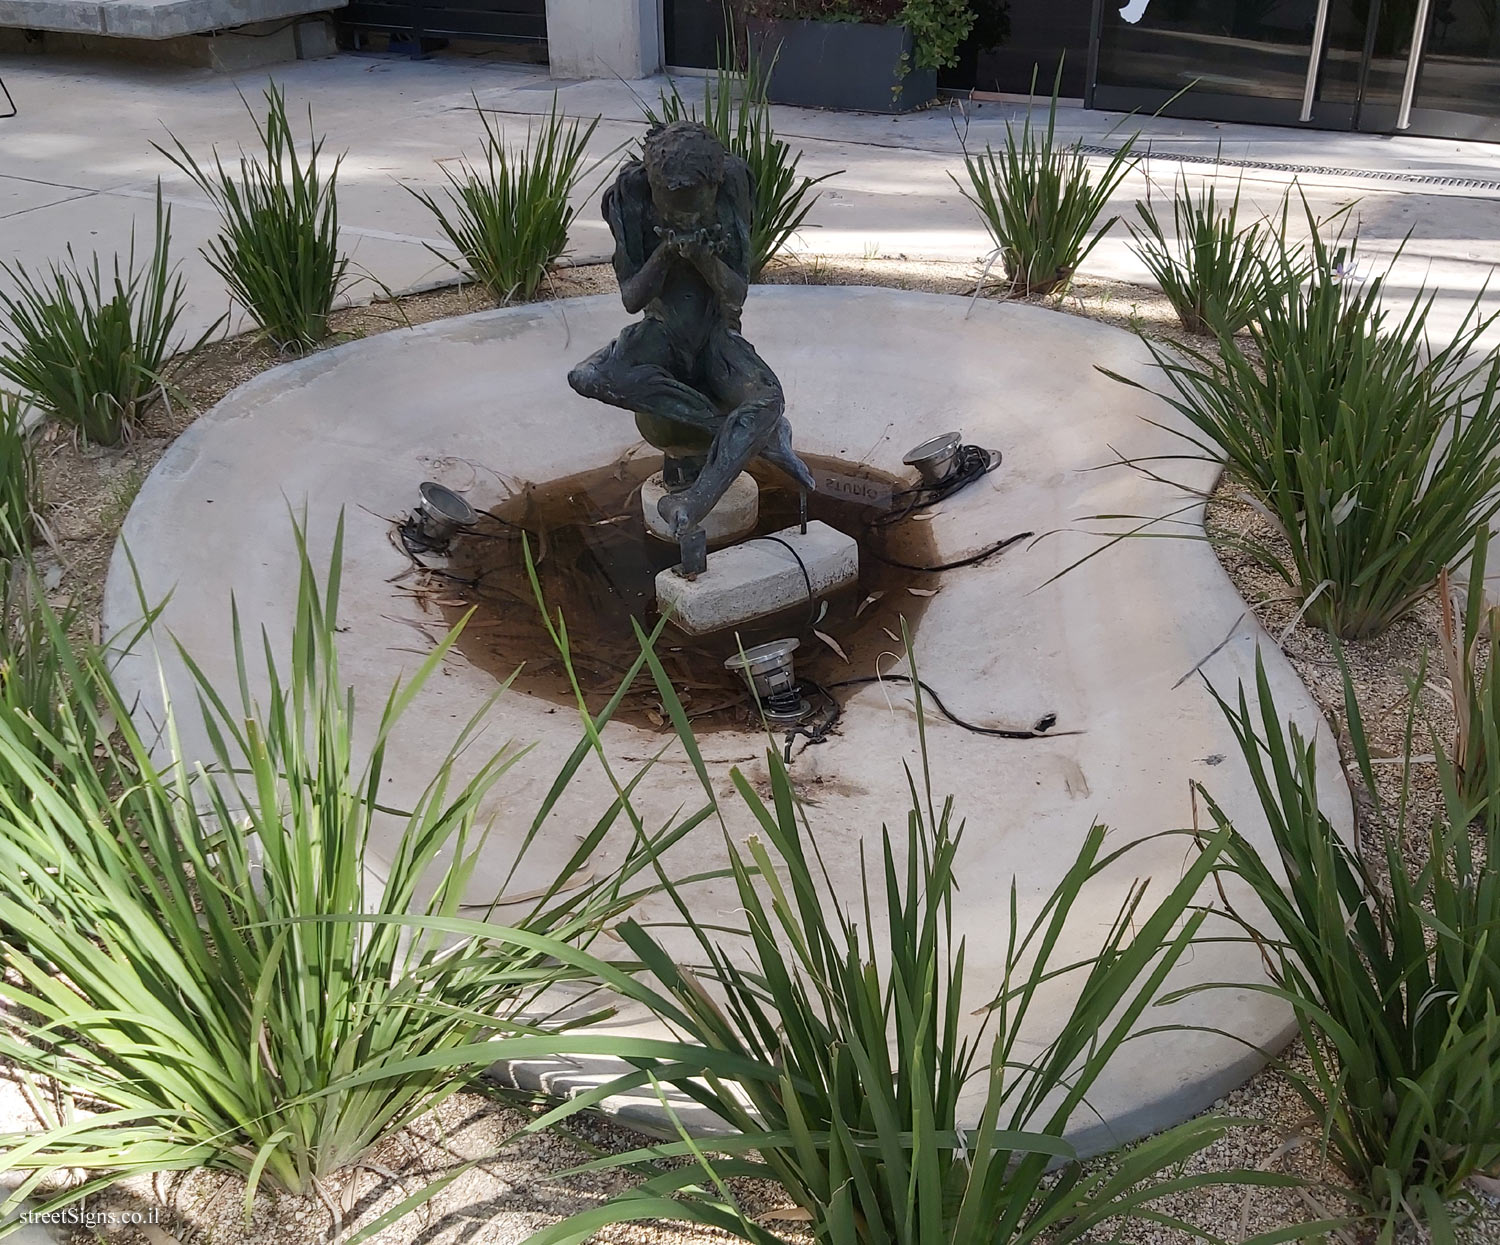 Tel Aviv - Lola Beer Ebner Sculpture Garden - "Cry boy’ cry" - Sigalit Landau - Tel Aviv Museum